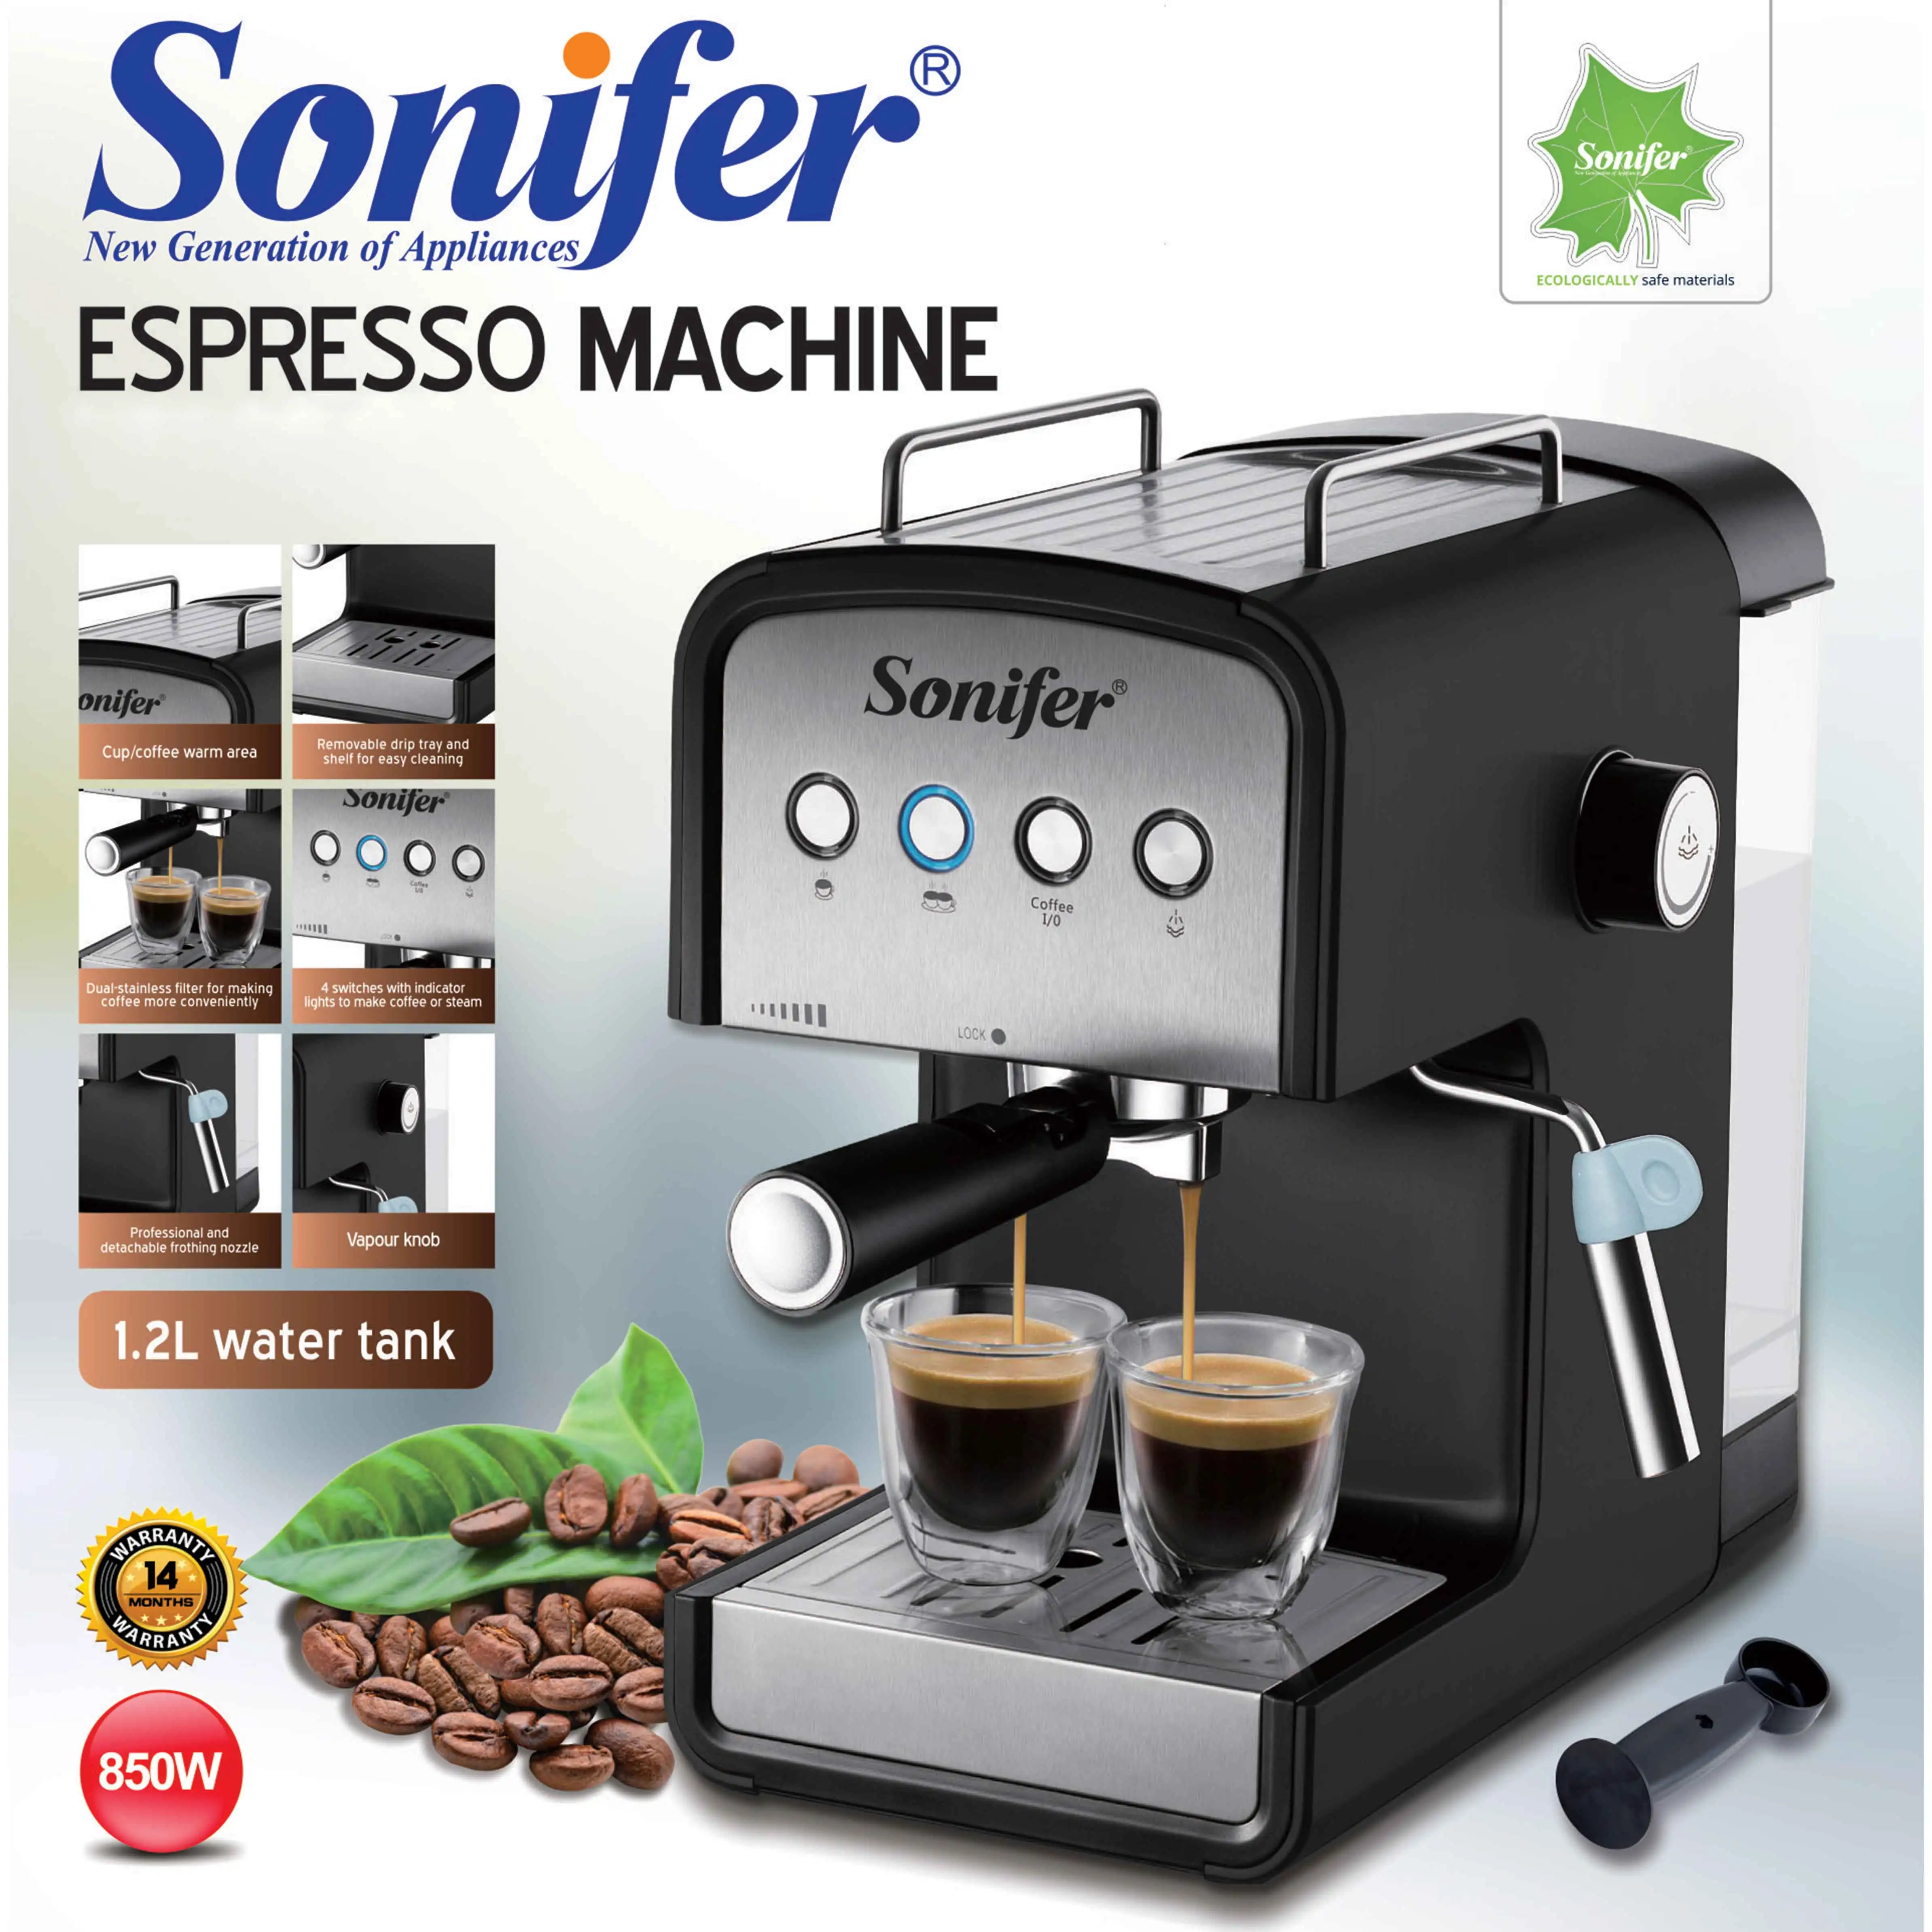 Sonifer تصميم جديد ماكينة القهوة اسبريسو 1 2 لتر ماكينة صنع قهوة اسبريسو للكابتشينو Sf 3529 Buy ماكينة صنع القهوة ماكينة صنع قهوة اسبريسو ماكينة صنع القهوة الكهربائية Product On Alibaba Com